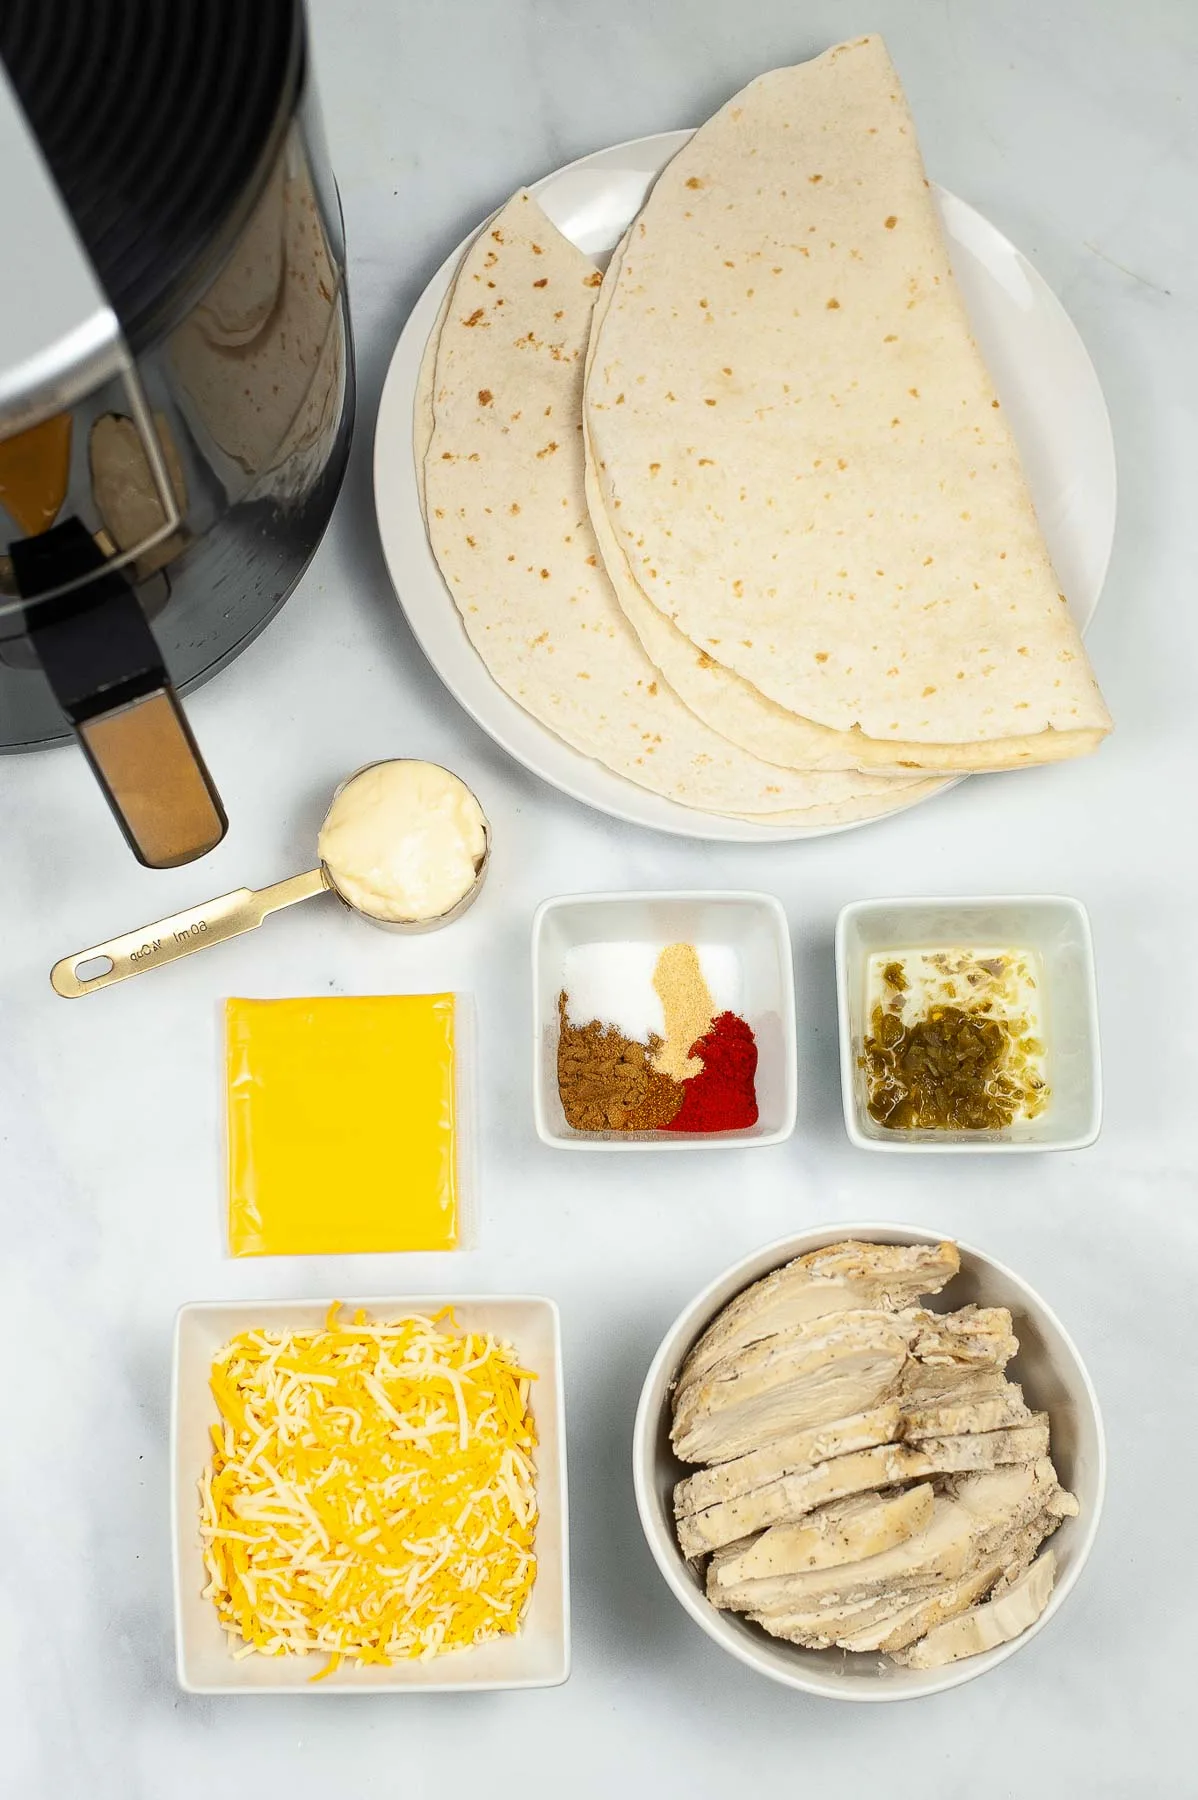 Ingredients for a copycat taco bell quesadilla recipe.